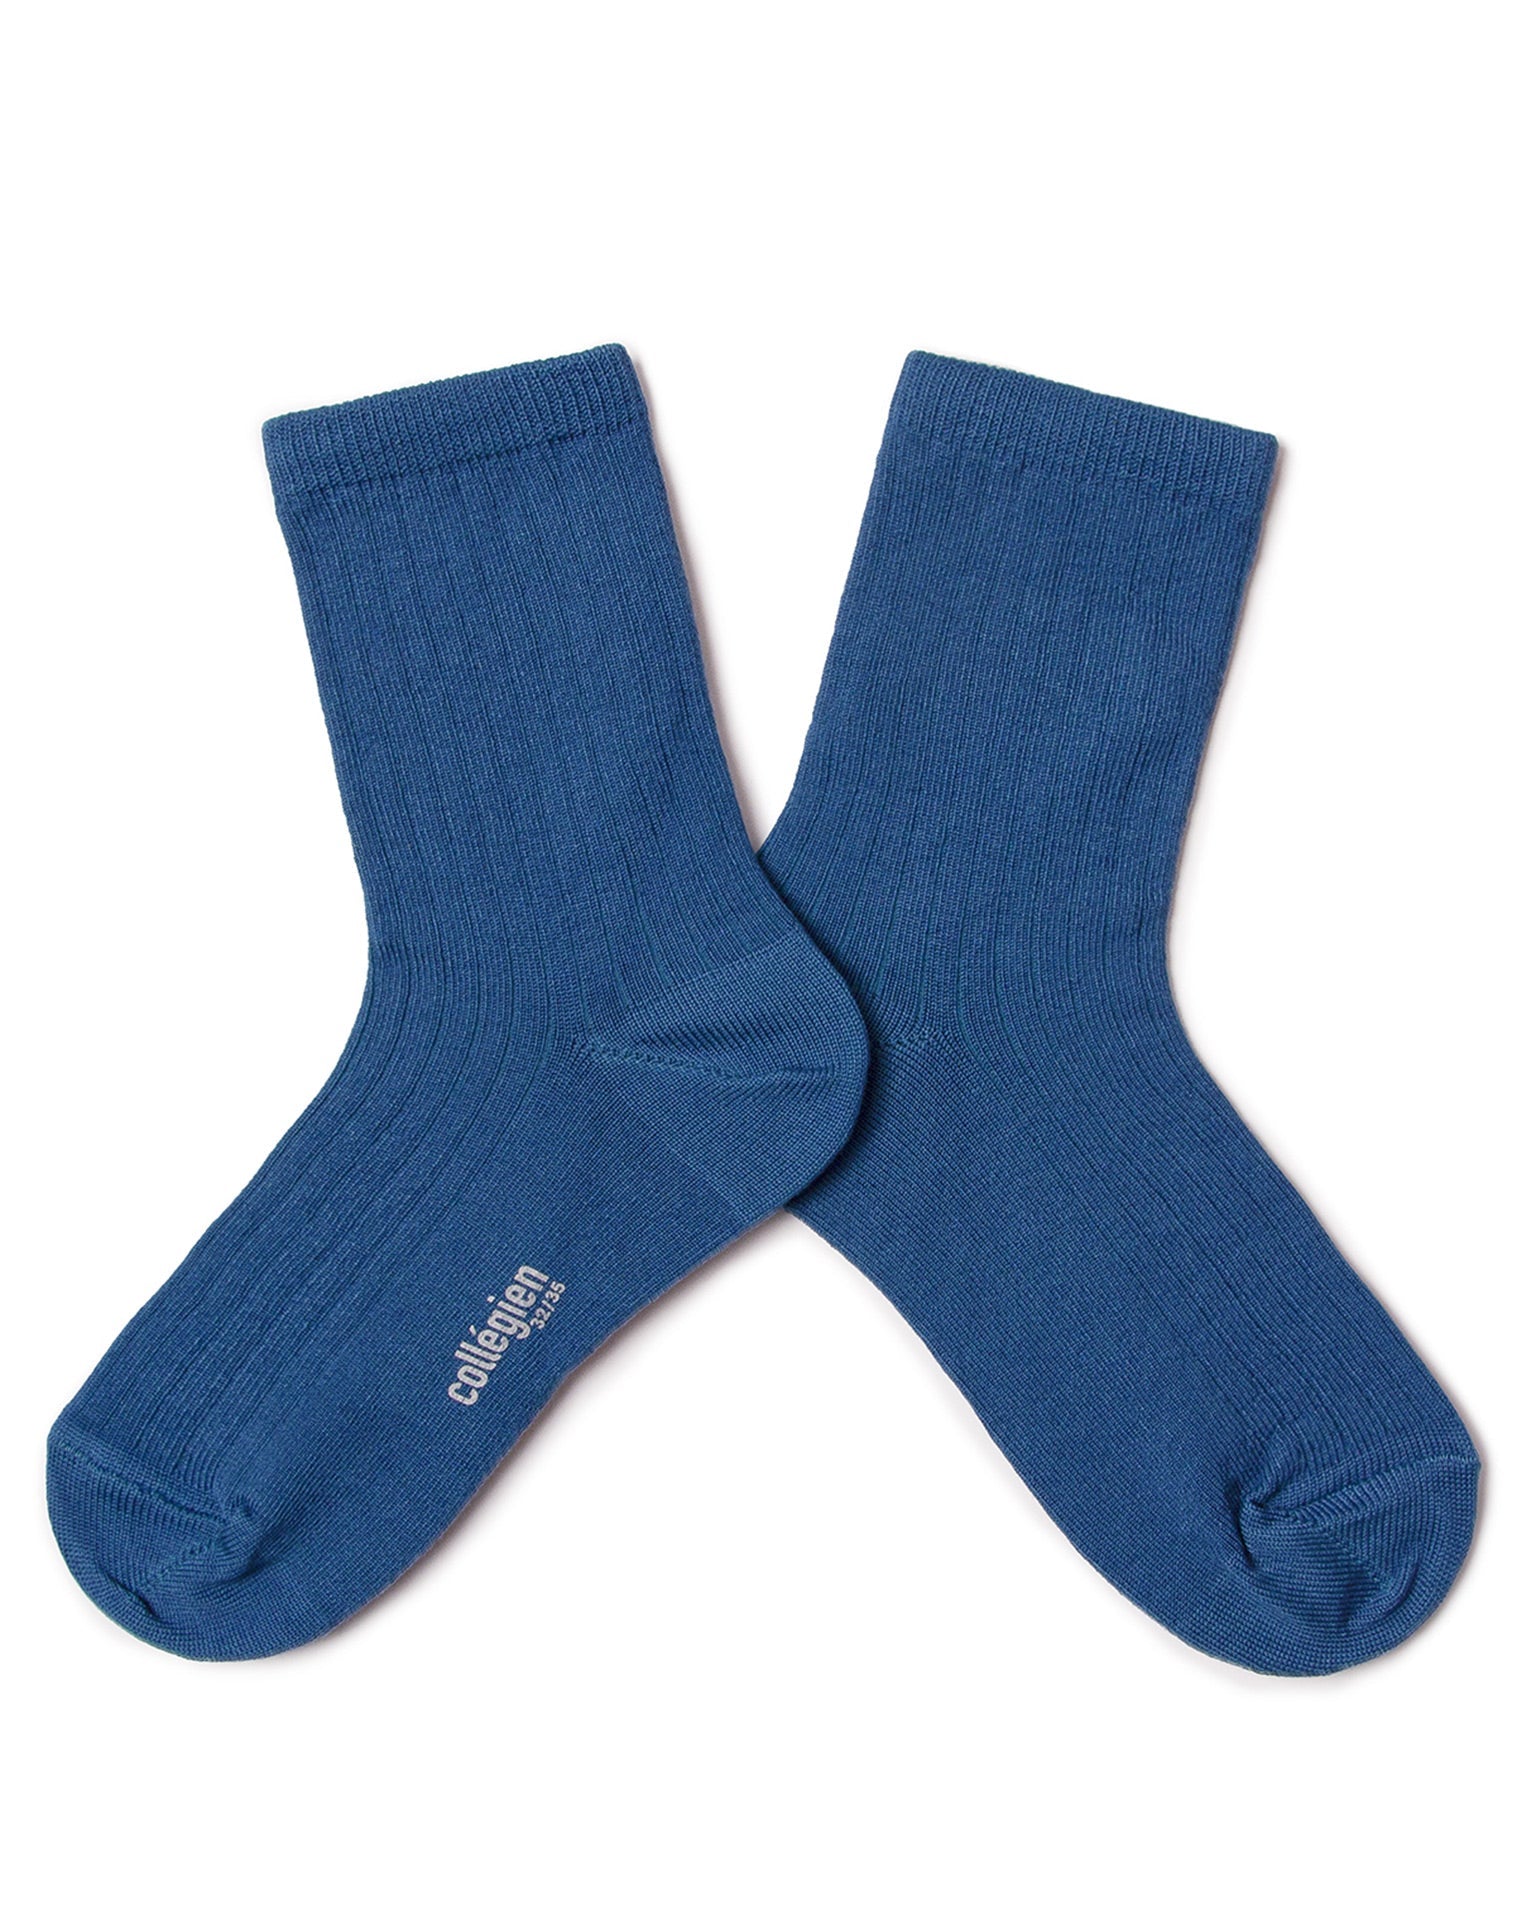 Little collegien accessories paul socks in bleu saphir